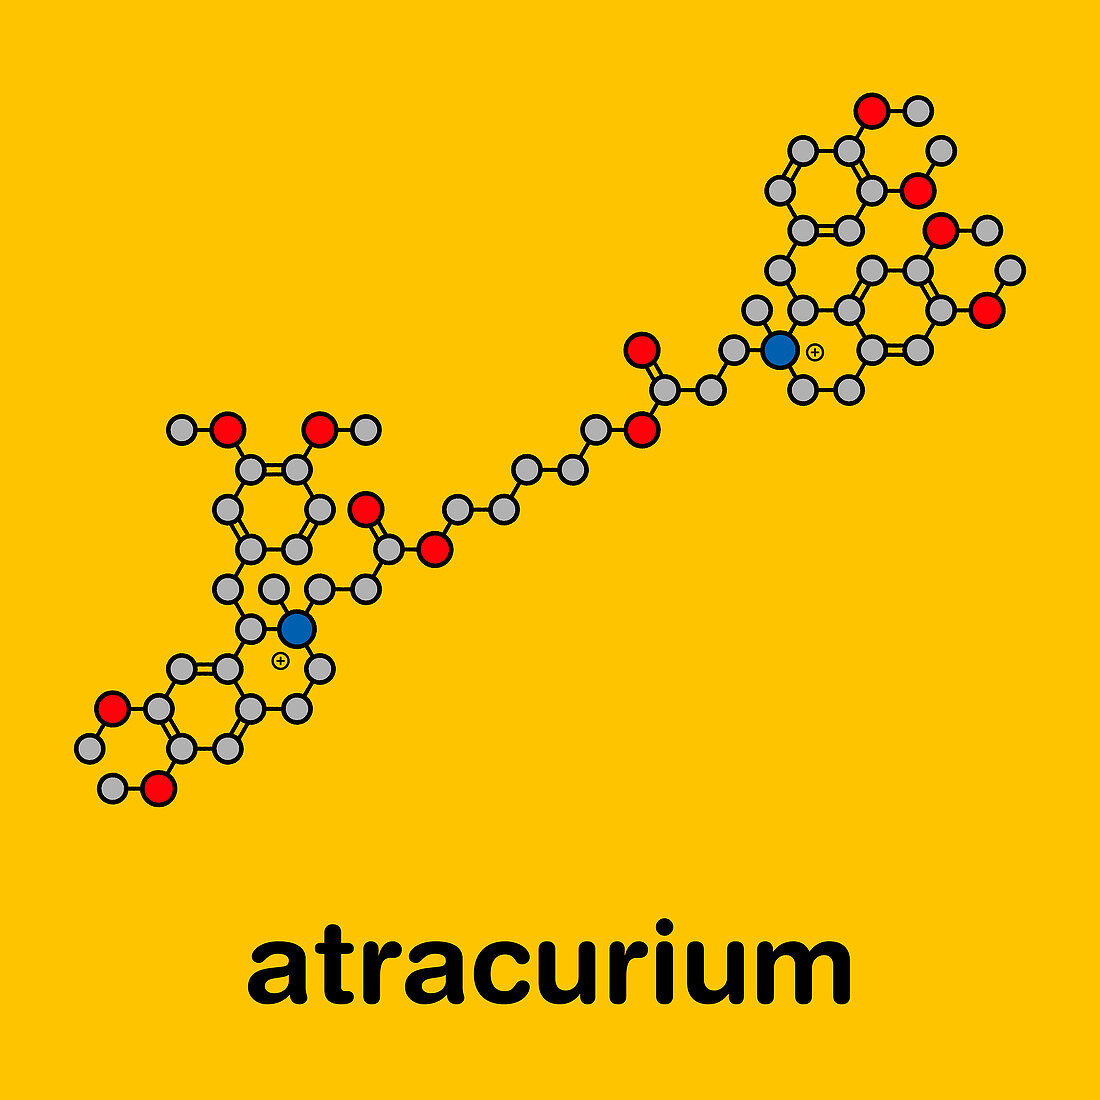 Atracurium skeletal muscle relaxant drug, molecular model